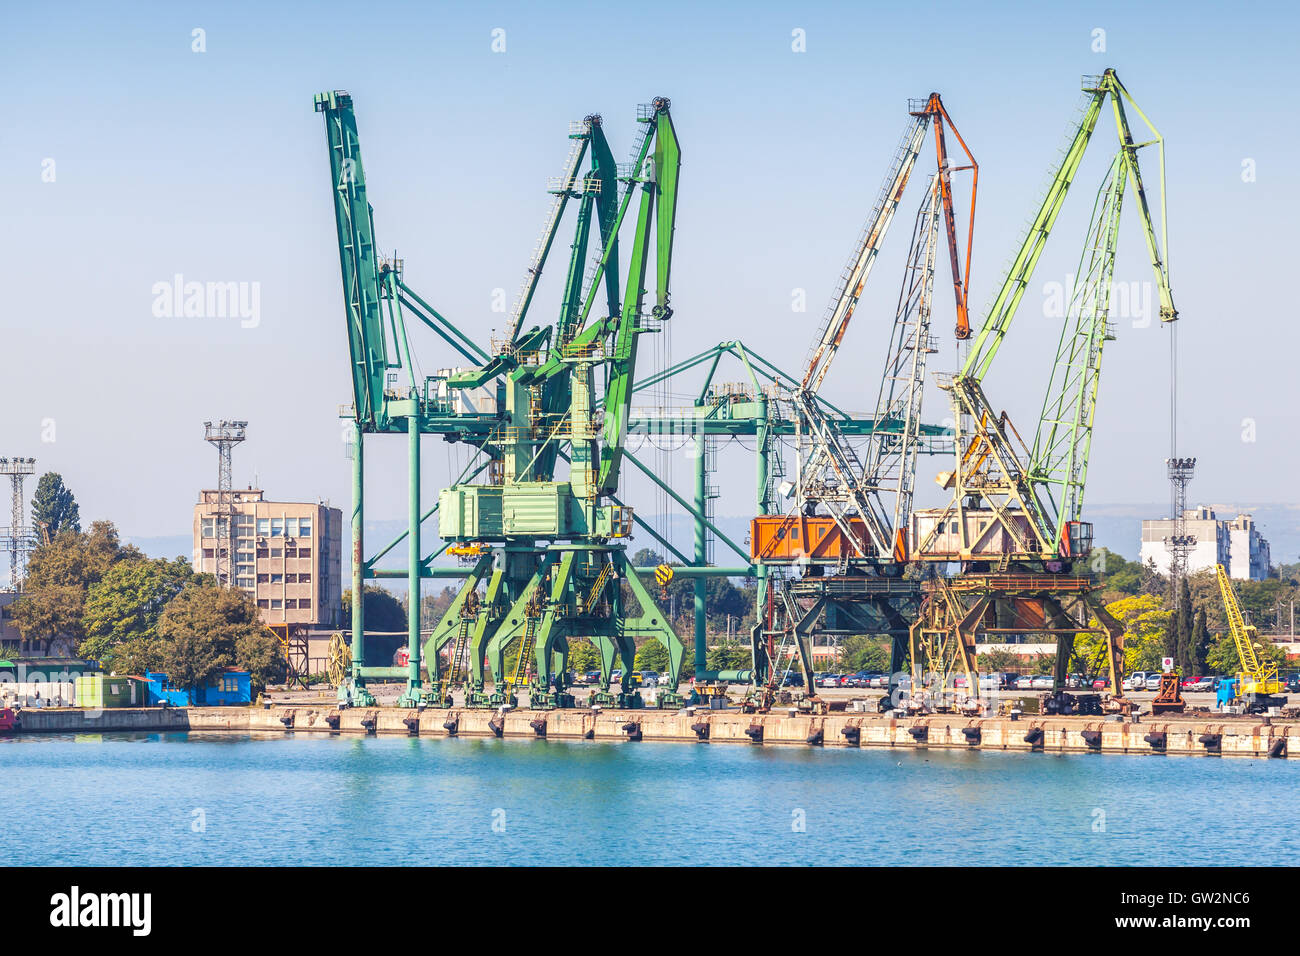 Cargo cranes, summer view of Varna port, Bulgaria Stock Photo